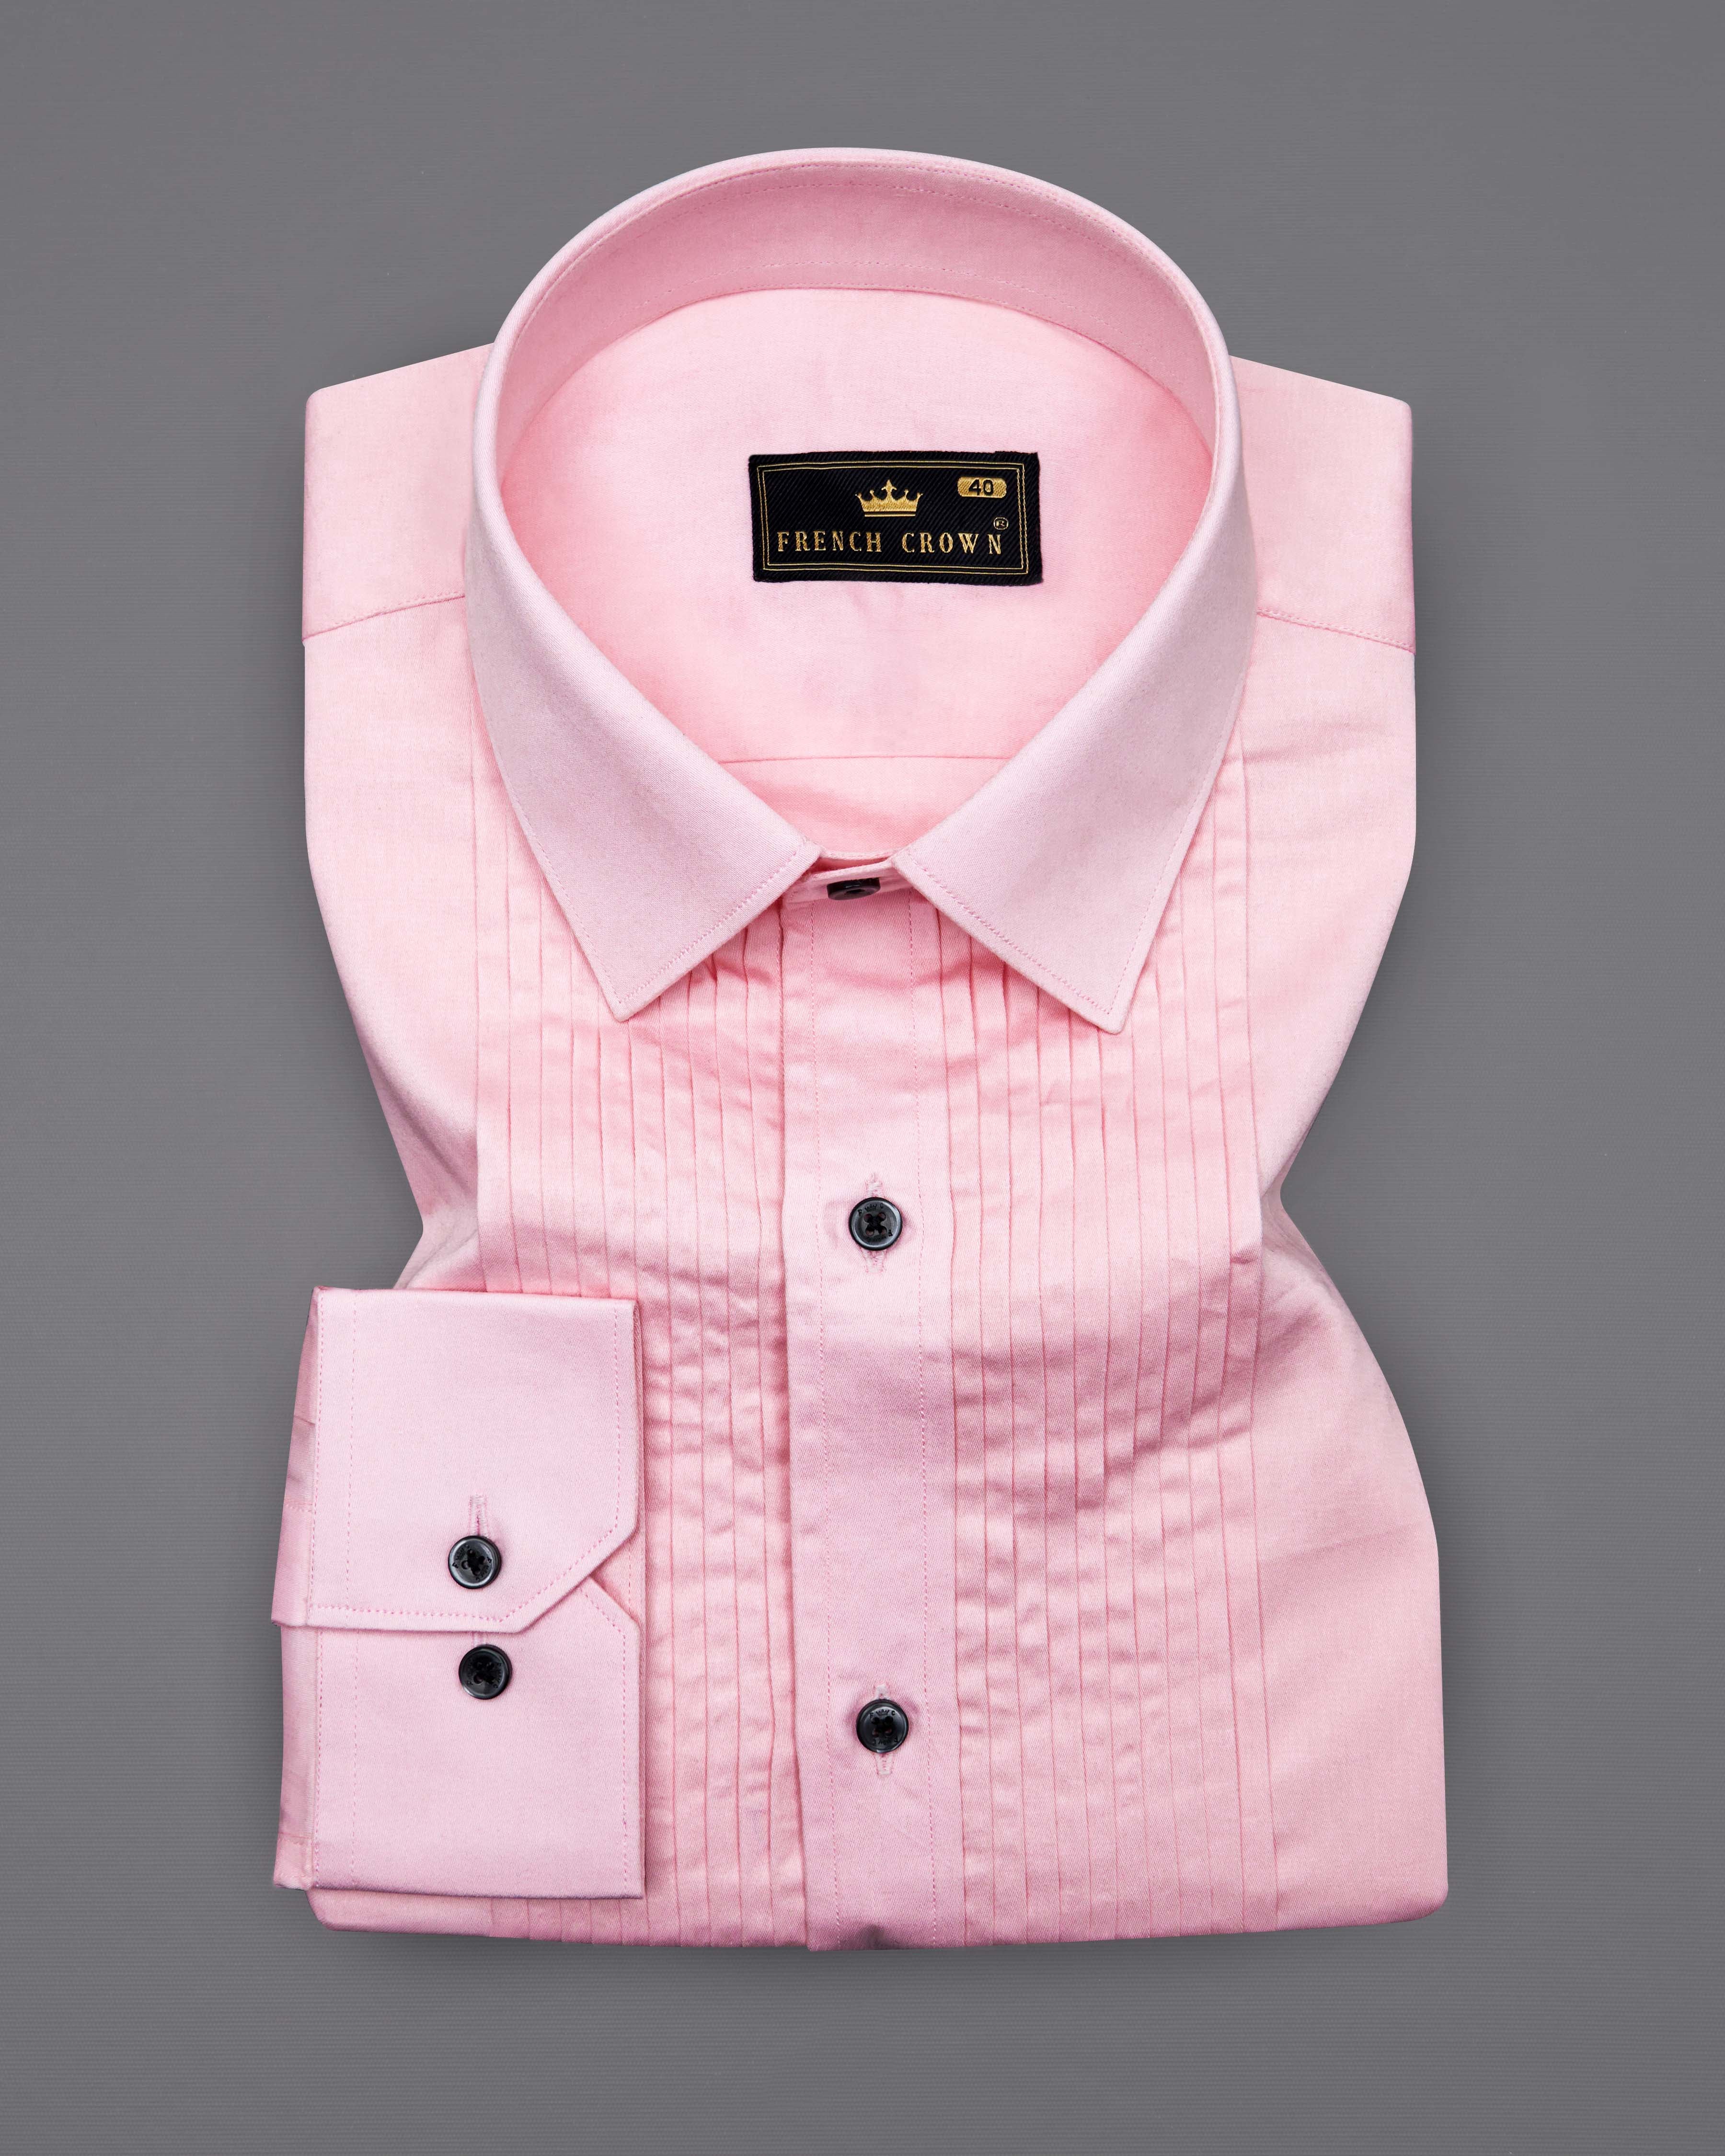 Pastel Pink Snake Pleated Super Soft Premium Cotton Tuxedo Shirt  8682-BLK-TXD-38,8682-BLK-TXD-H-38,8682-BLK-TXD-39,8682-BLK-TXD-H-39,8682-BLK-TXD-40,8682-BLK-TXD-H-40,8682-BLK-TXD-42,8682-BLK-TXD-H-42,8682-BLK-TXD-44,8682-BLK-TXD-H-44,8682-BLK-TXD-46,8682-BLK-TXD-H-46,8682-BLK-TXD-48,8682-BLK-TXD-H-48,8682-BLK-TXD-50,8682-BLK-TXD-H-50,8682-BLK-TXD-52,8682-BLK-TXD-H-52